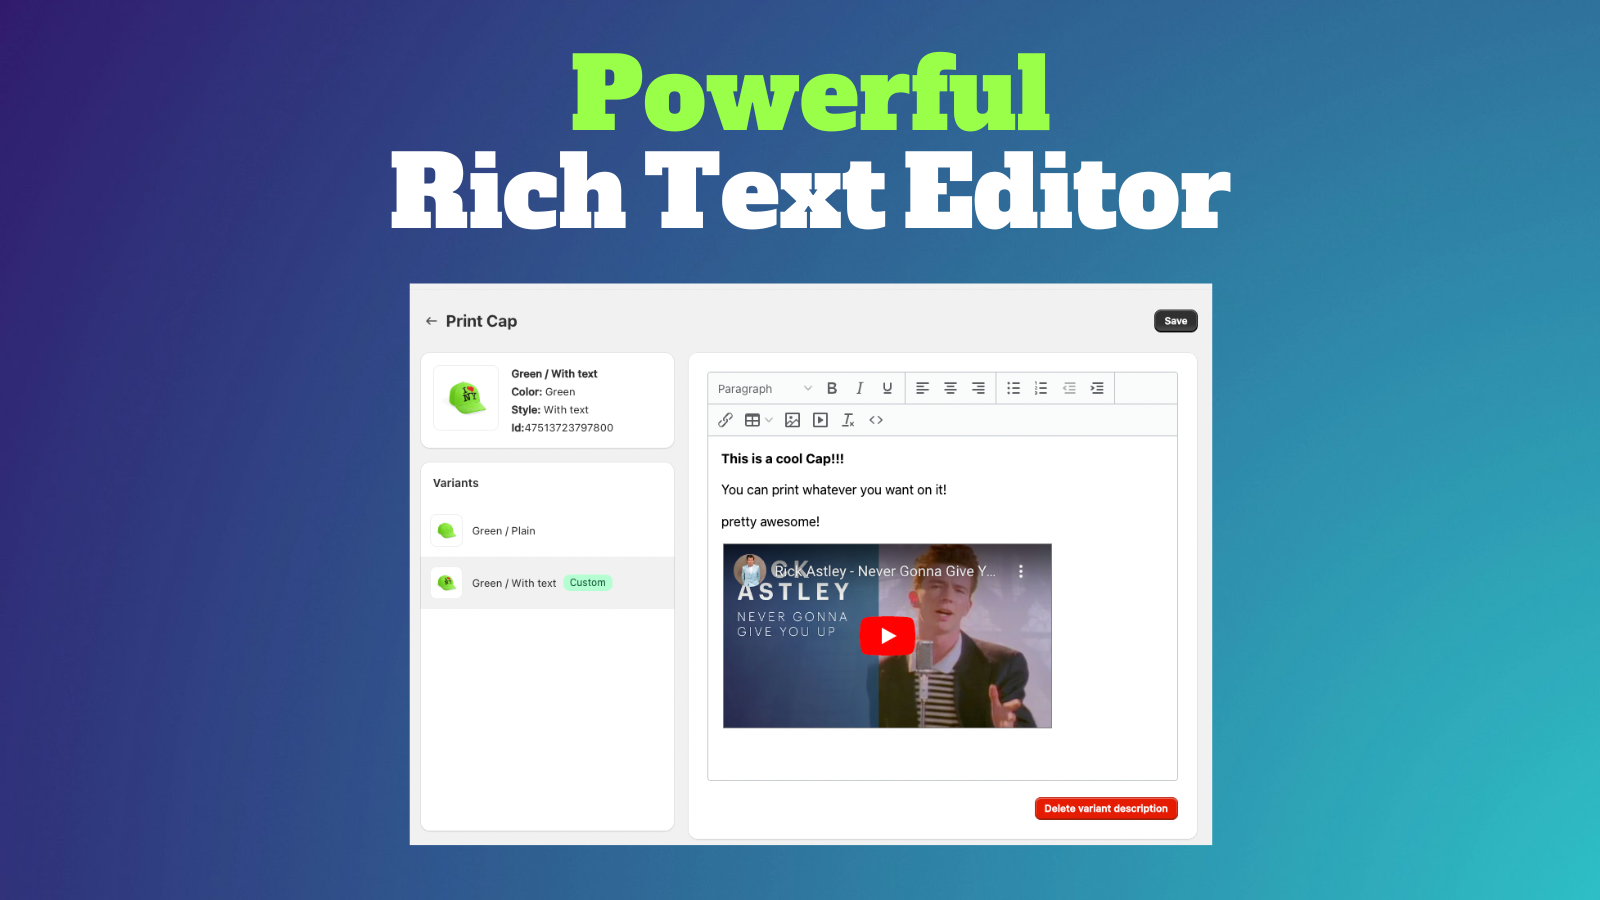 Leistungsstarker Rich-Text-Editor für Produkt-, Variantenbeschreibung